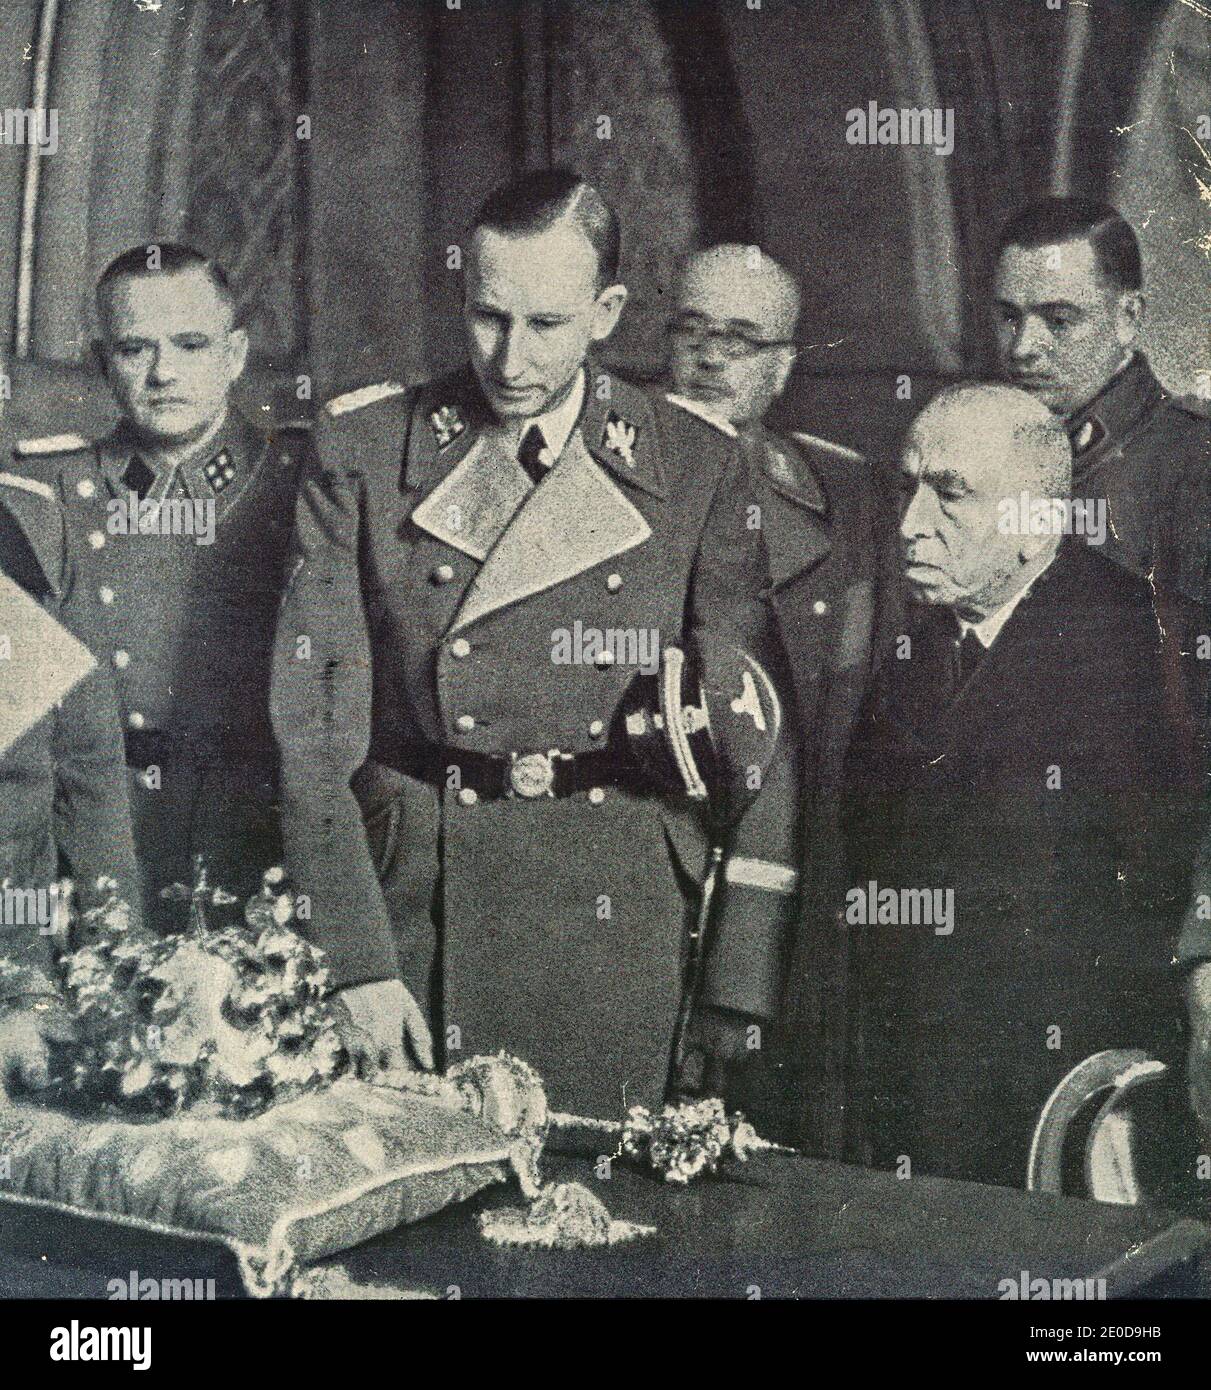 PRAGUE, PROTECTORATE OF BOHEMIA AND MORAVIA - NOVEMBER 19, 1941:Reinhard Heydrich, Deputy Reich Protector of the Protectorate of Bohemia and Moravia, Stock Photo